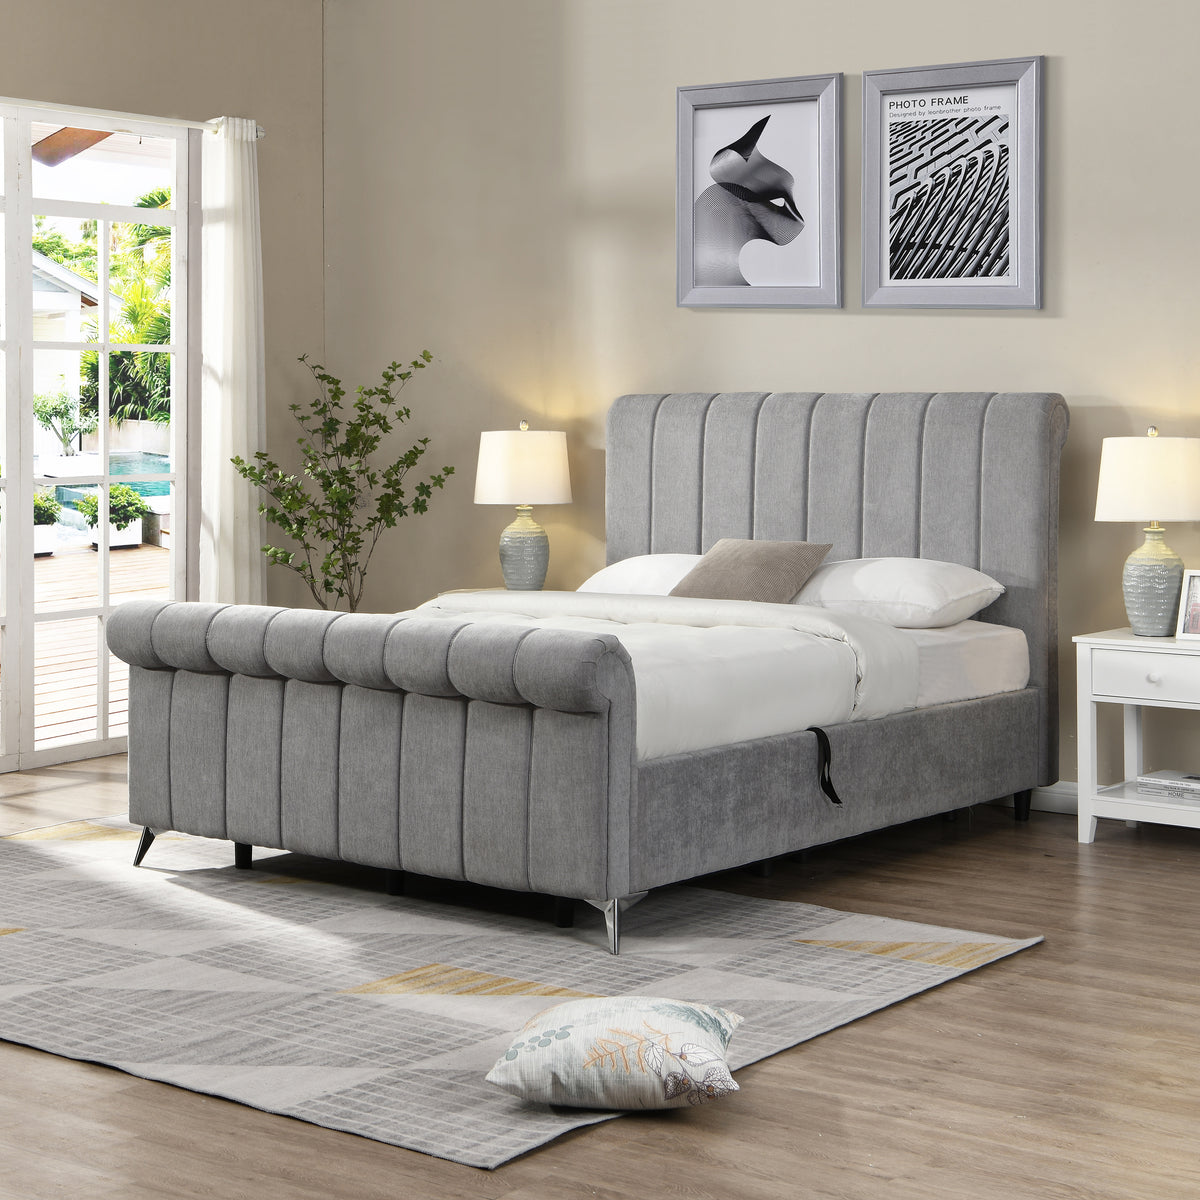 Carlow Grey Bed - GI